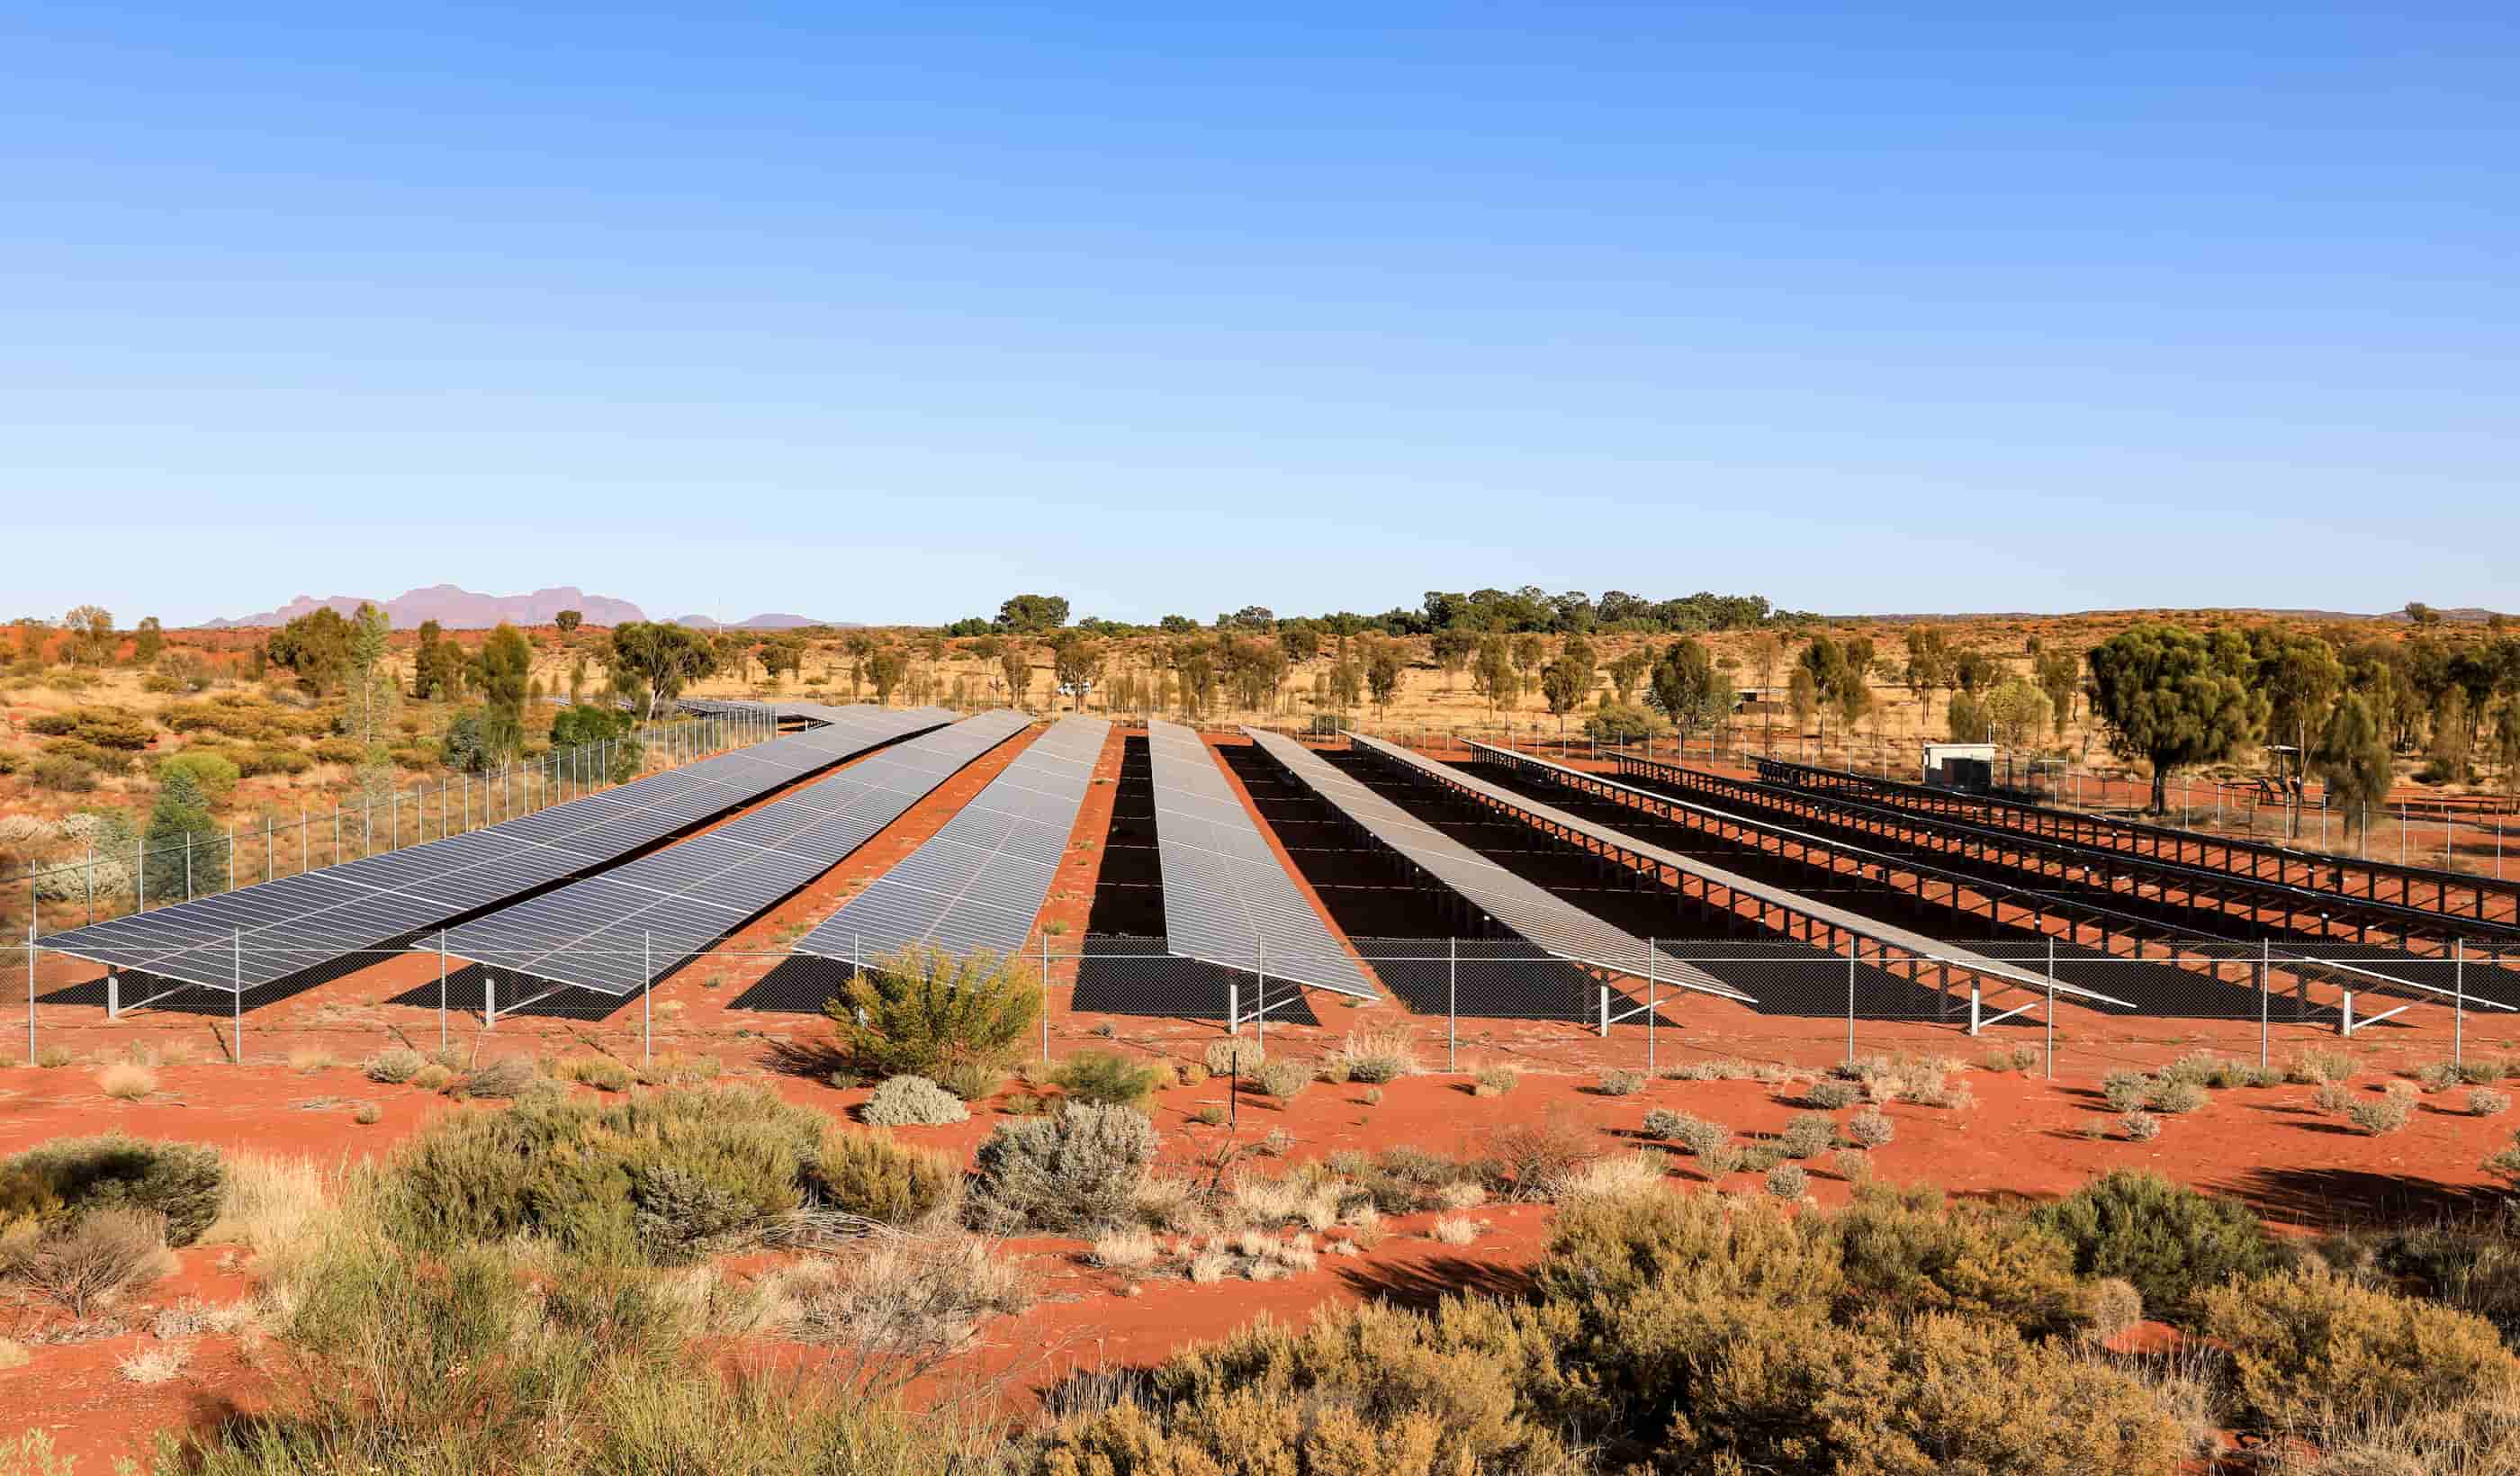 Uterne Solar Farm